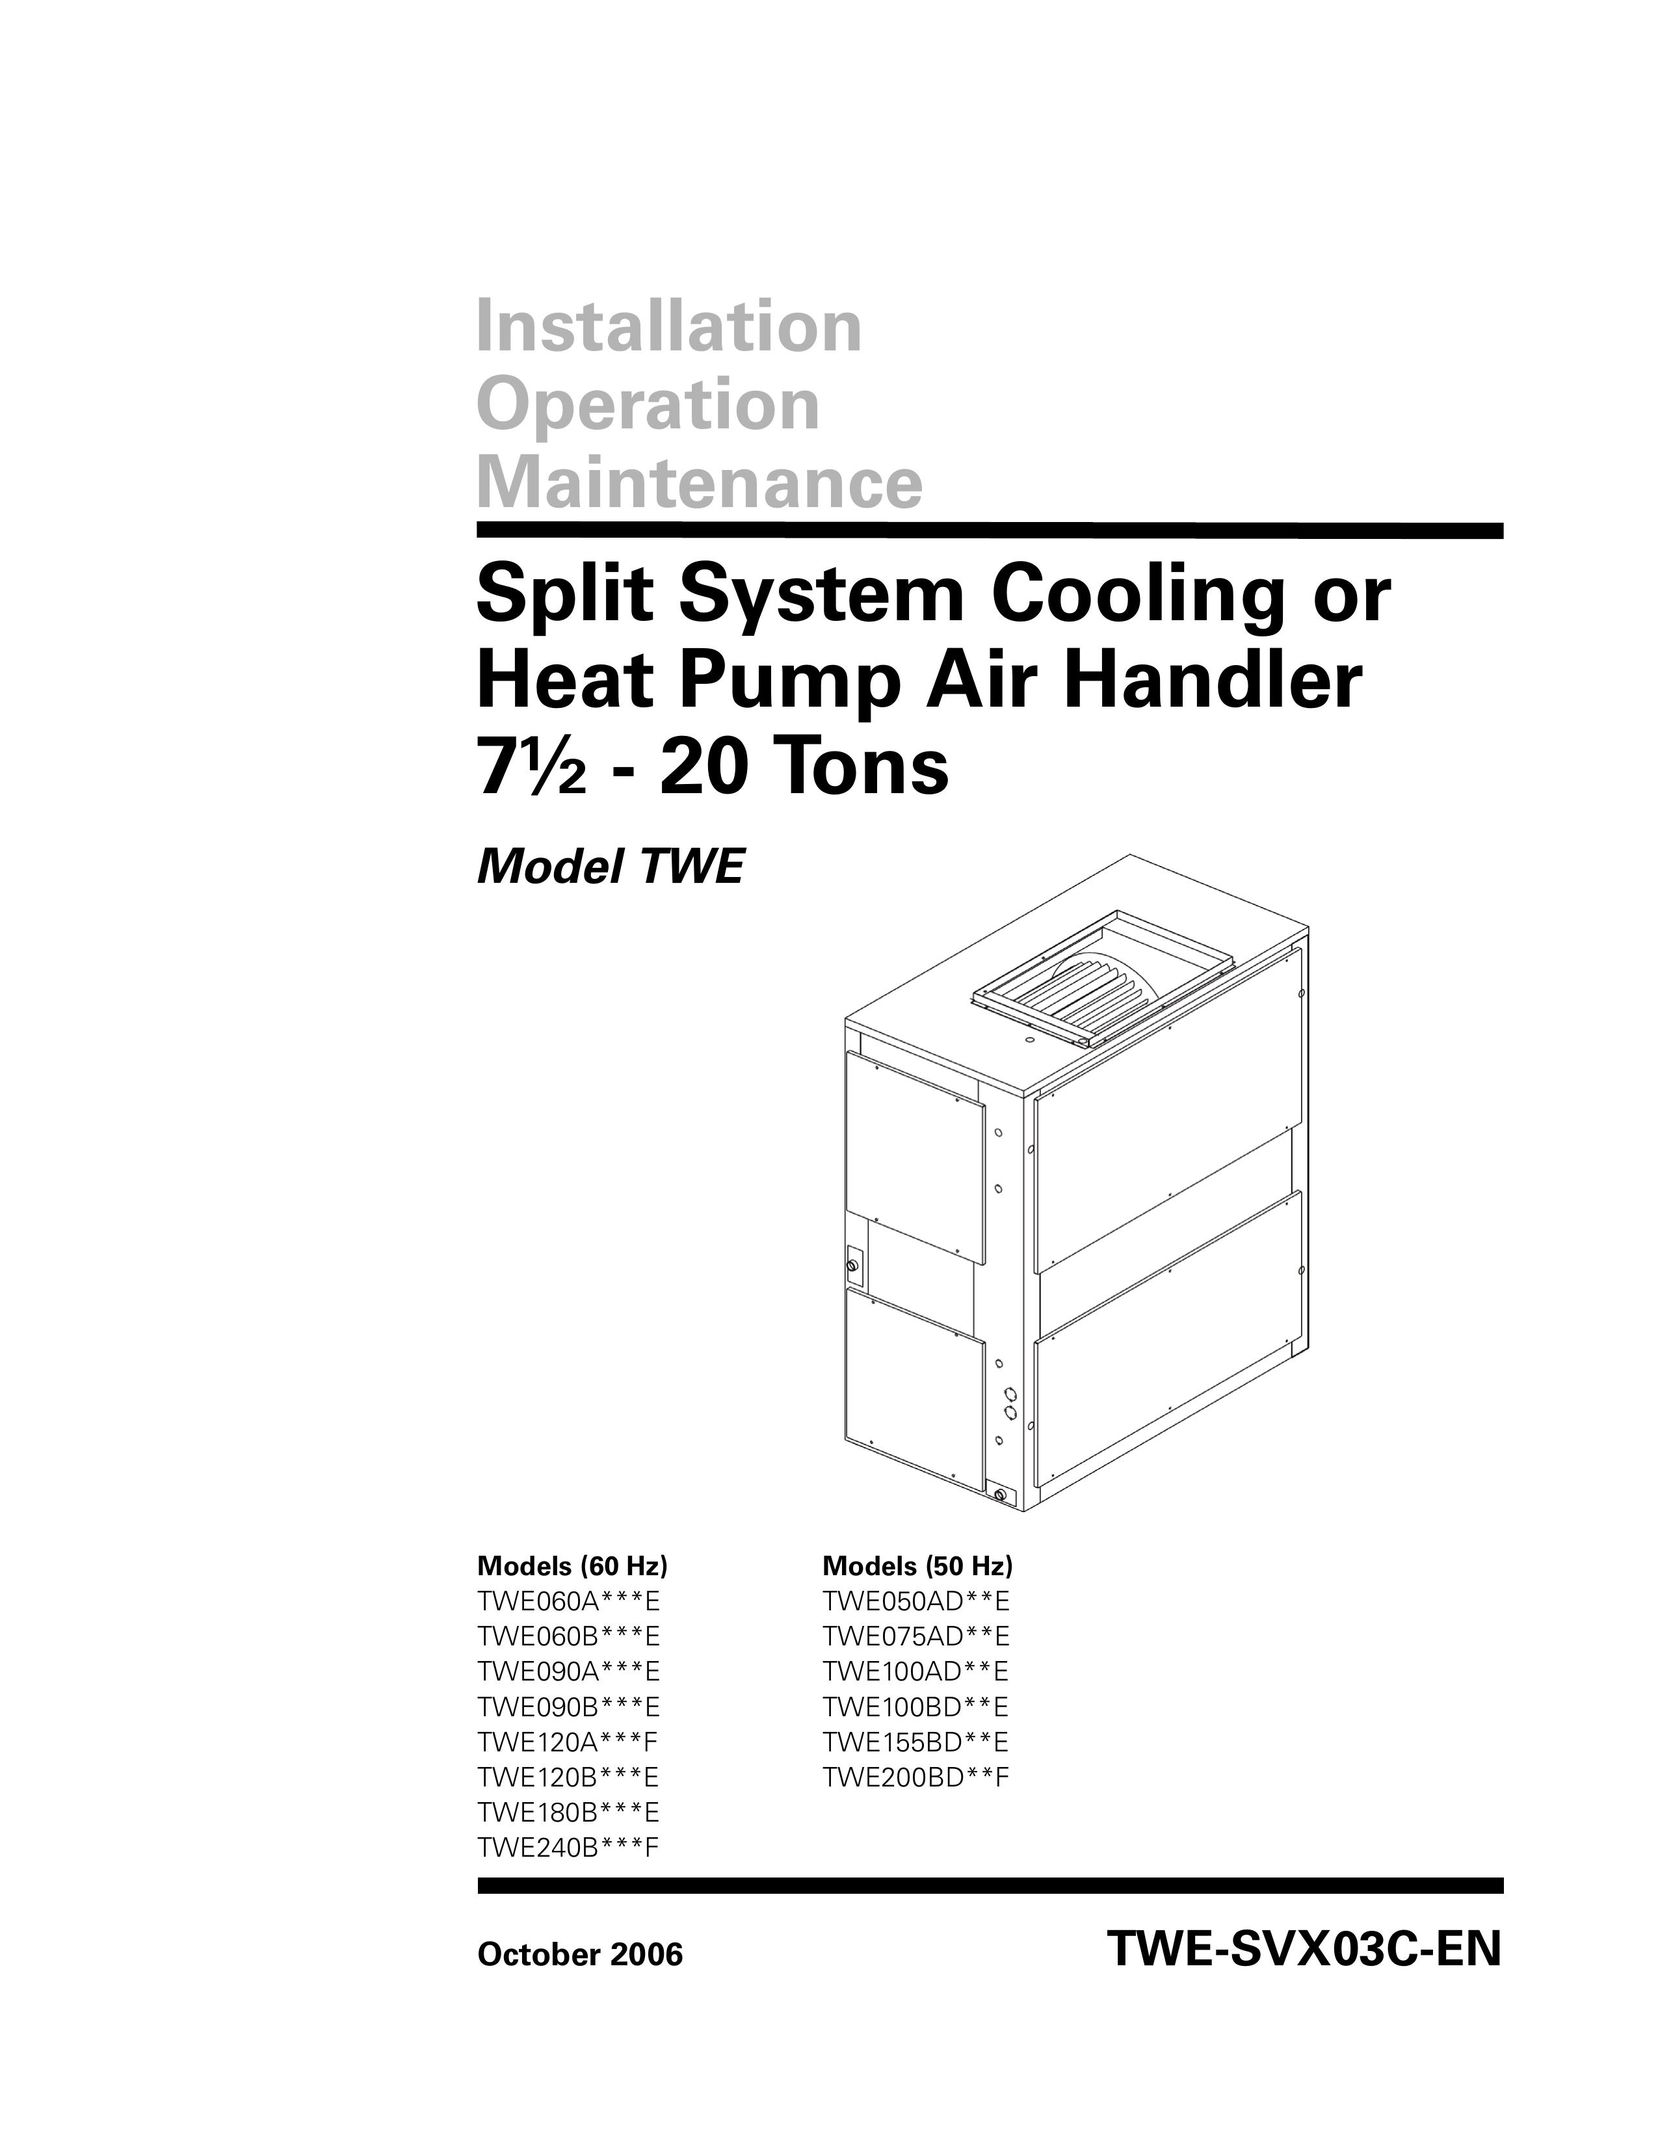 American Standard TWE120B***E Heat Pump User Manual